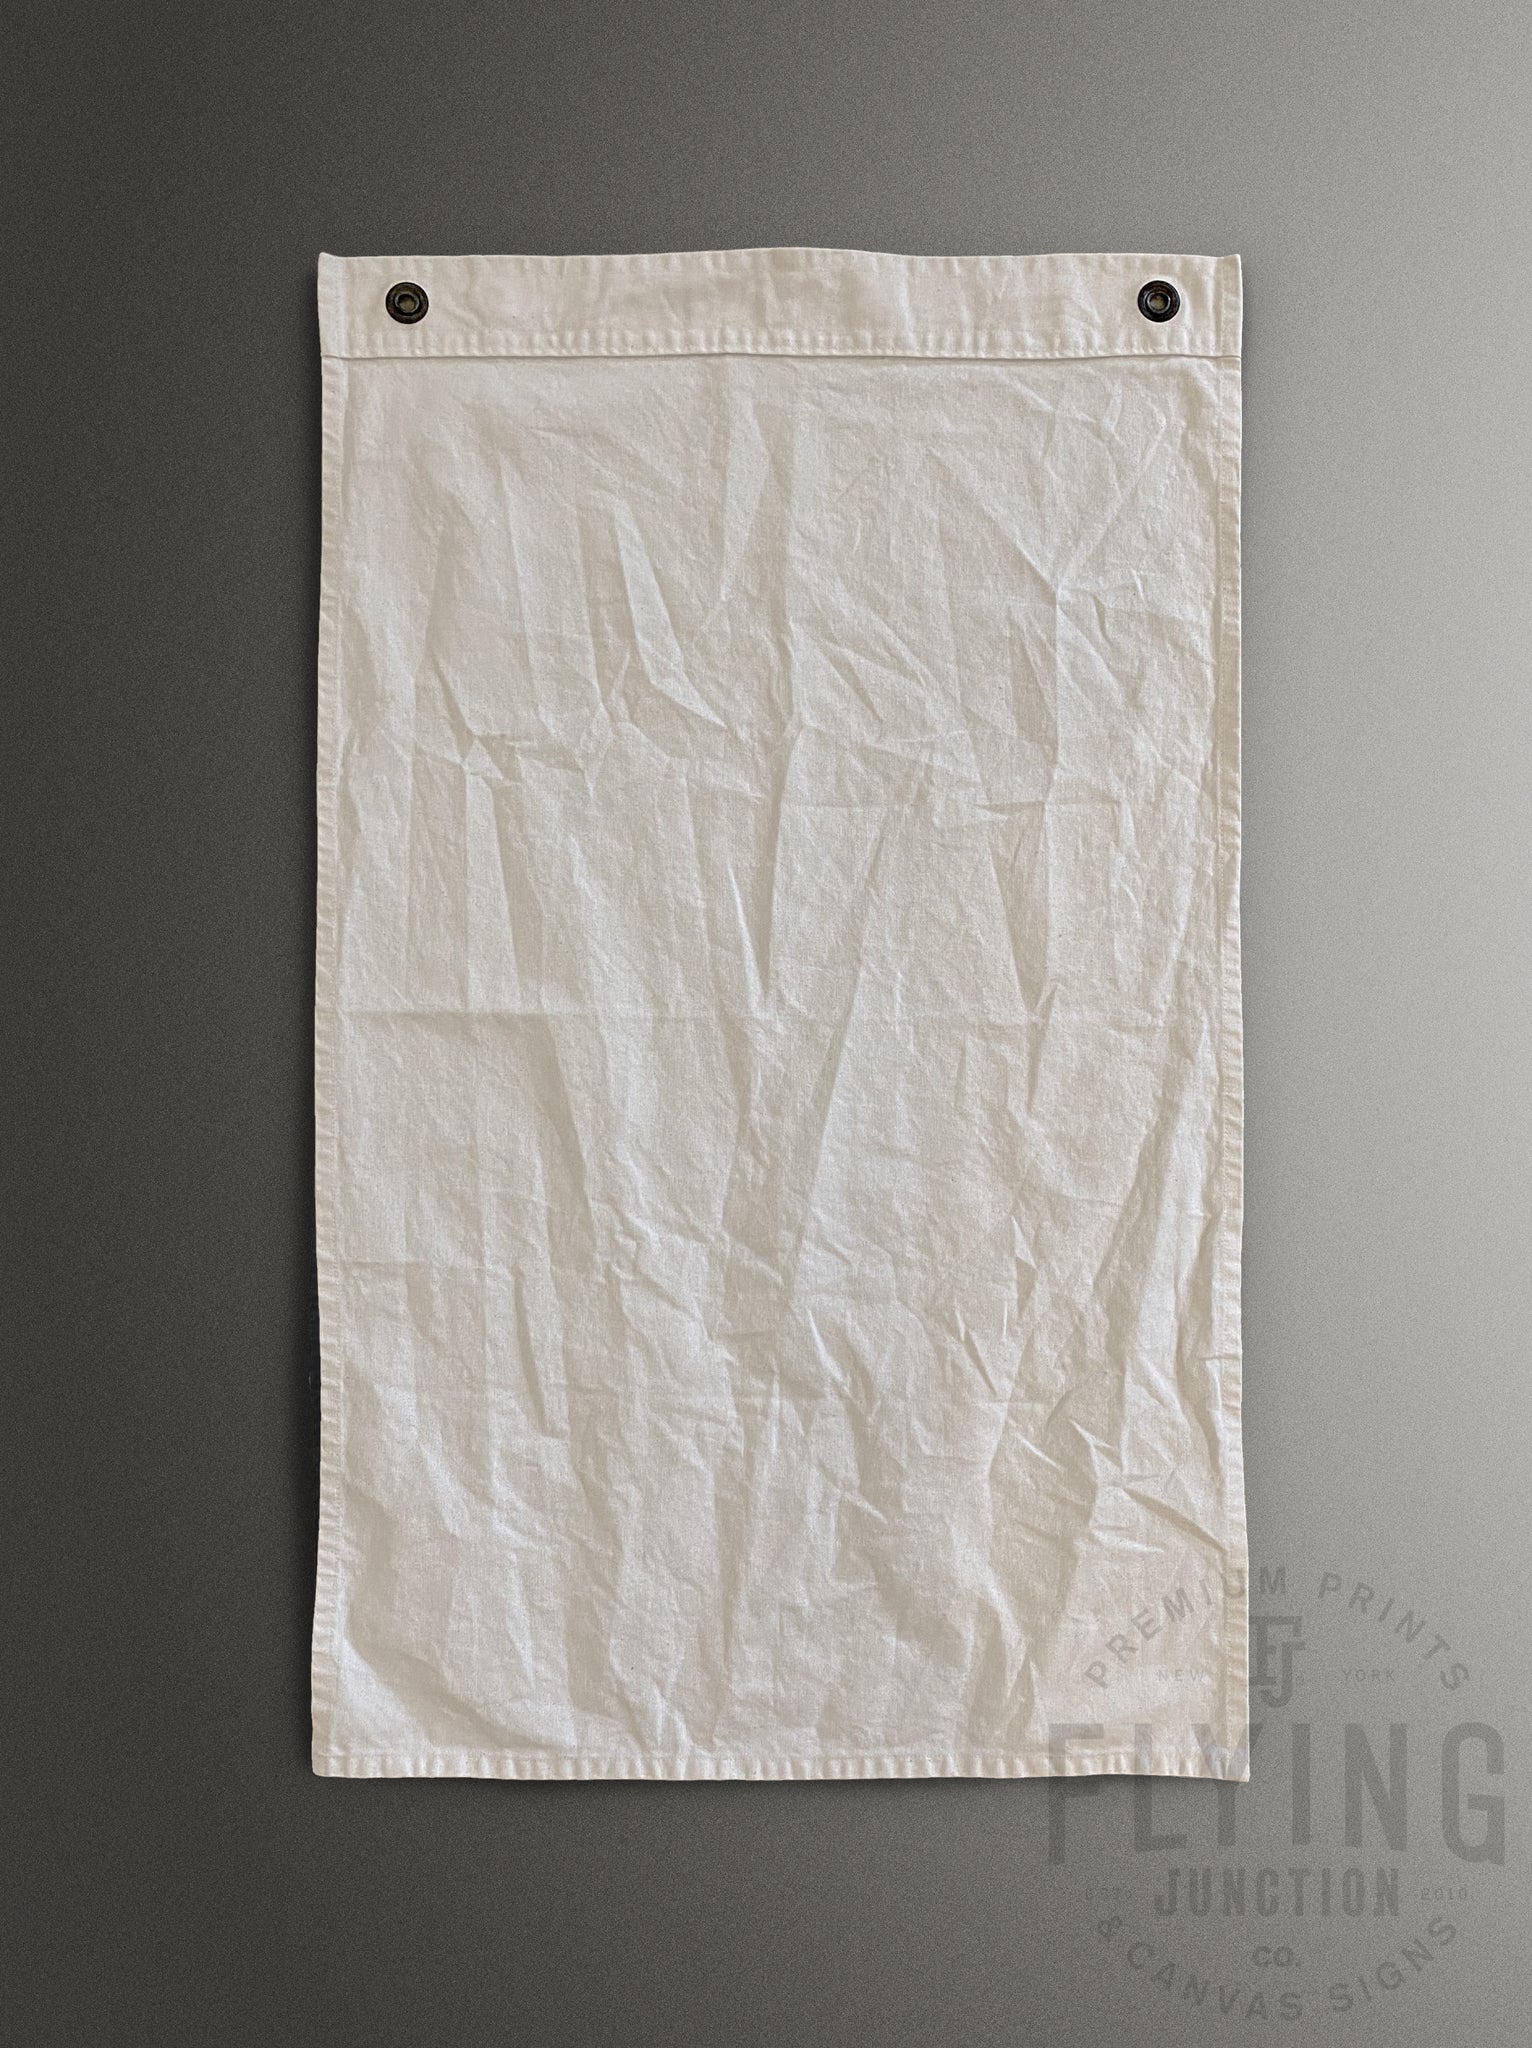 Premium Blank Cotton Canvas Flag (Black or Natural)